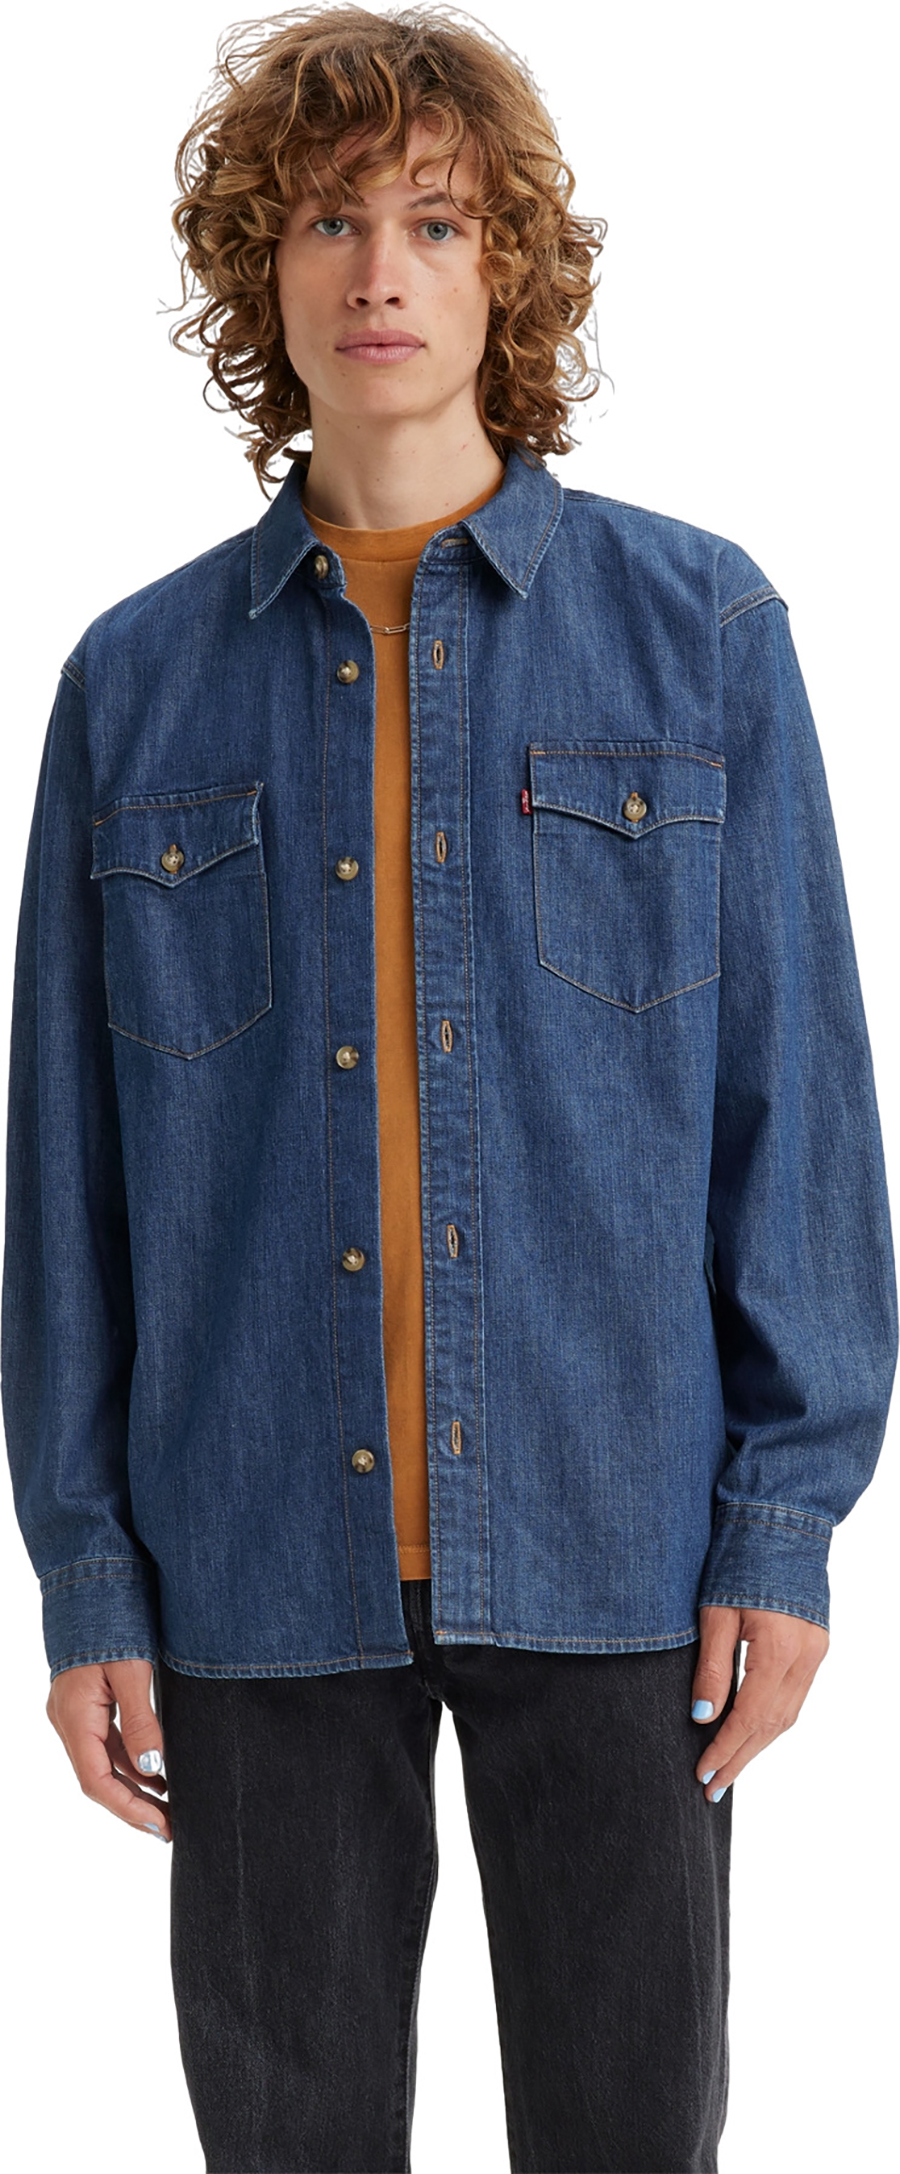 Рубашка Levi's для мужчин, A1919, размер XS, тёмно-синяя-0020